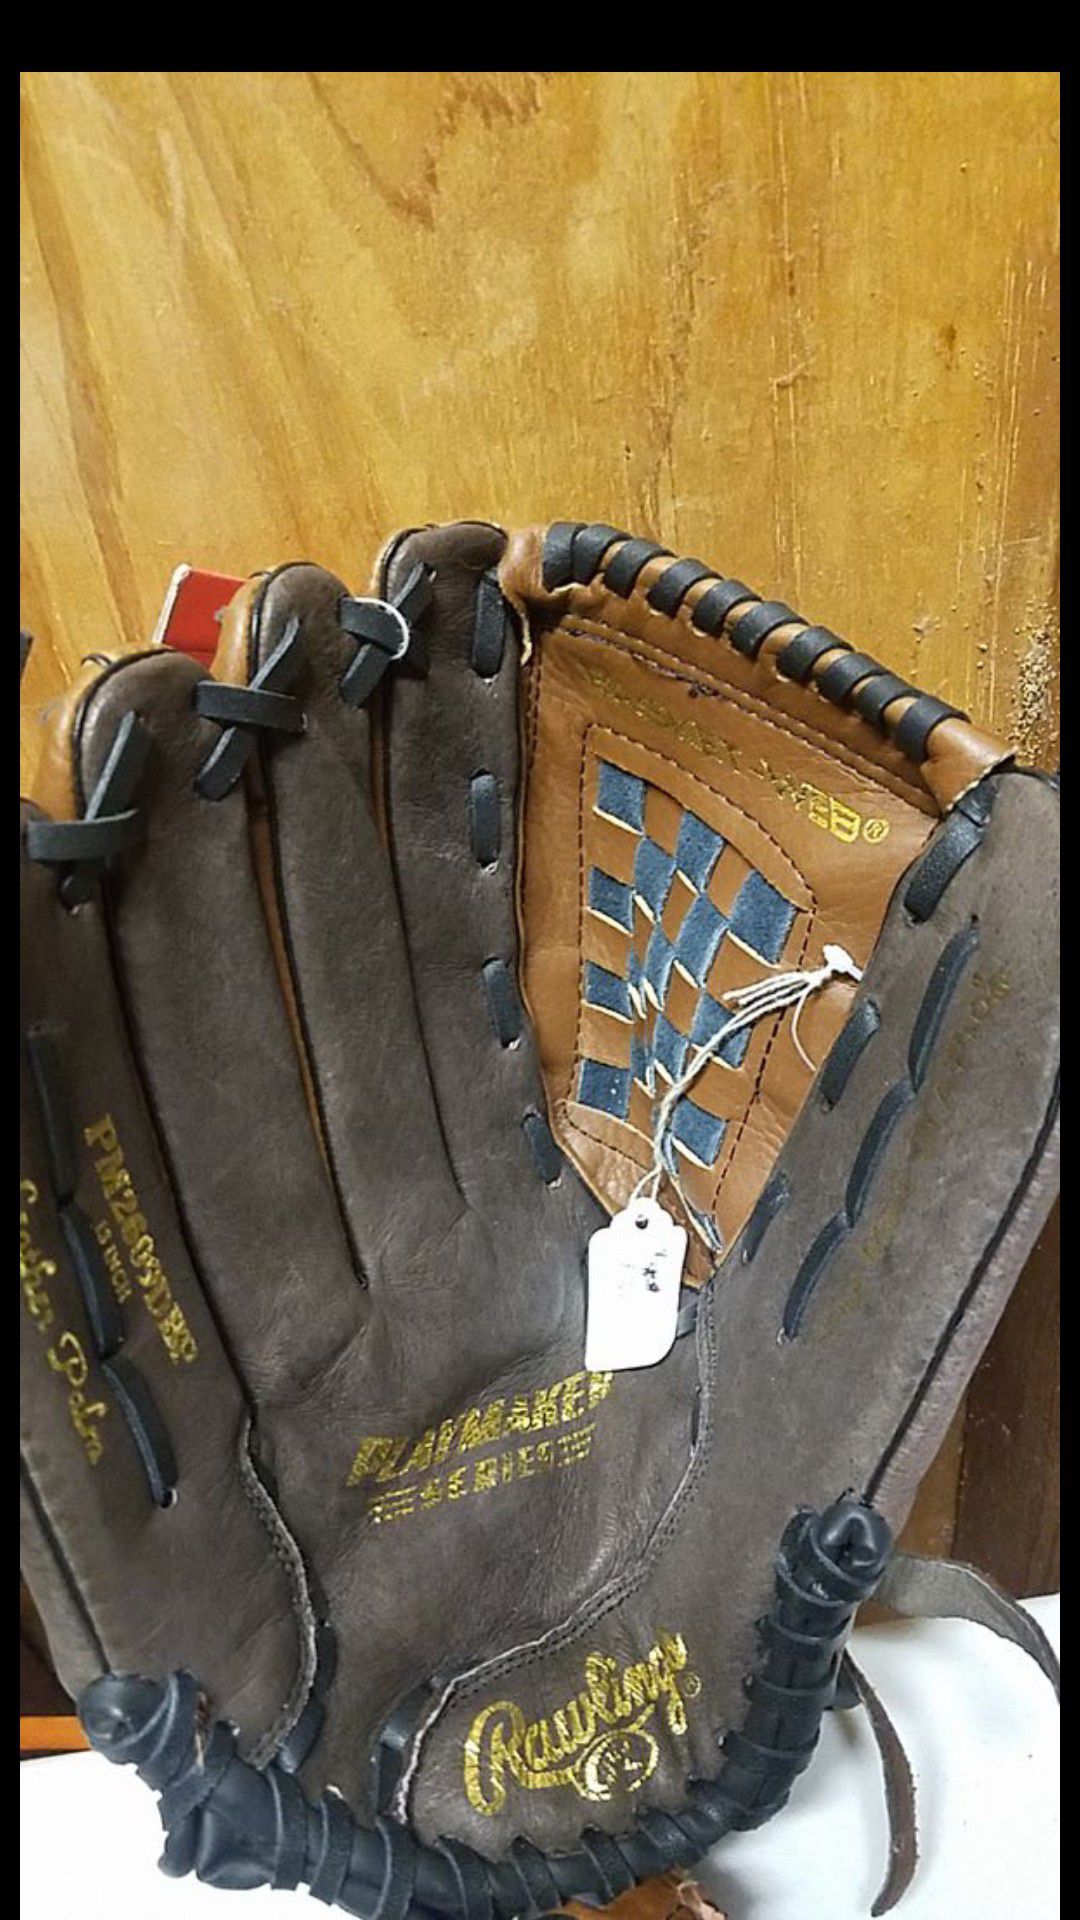 Rawlings softball glove, 13"